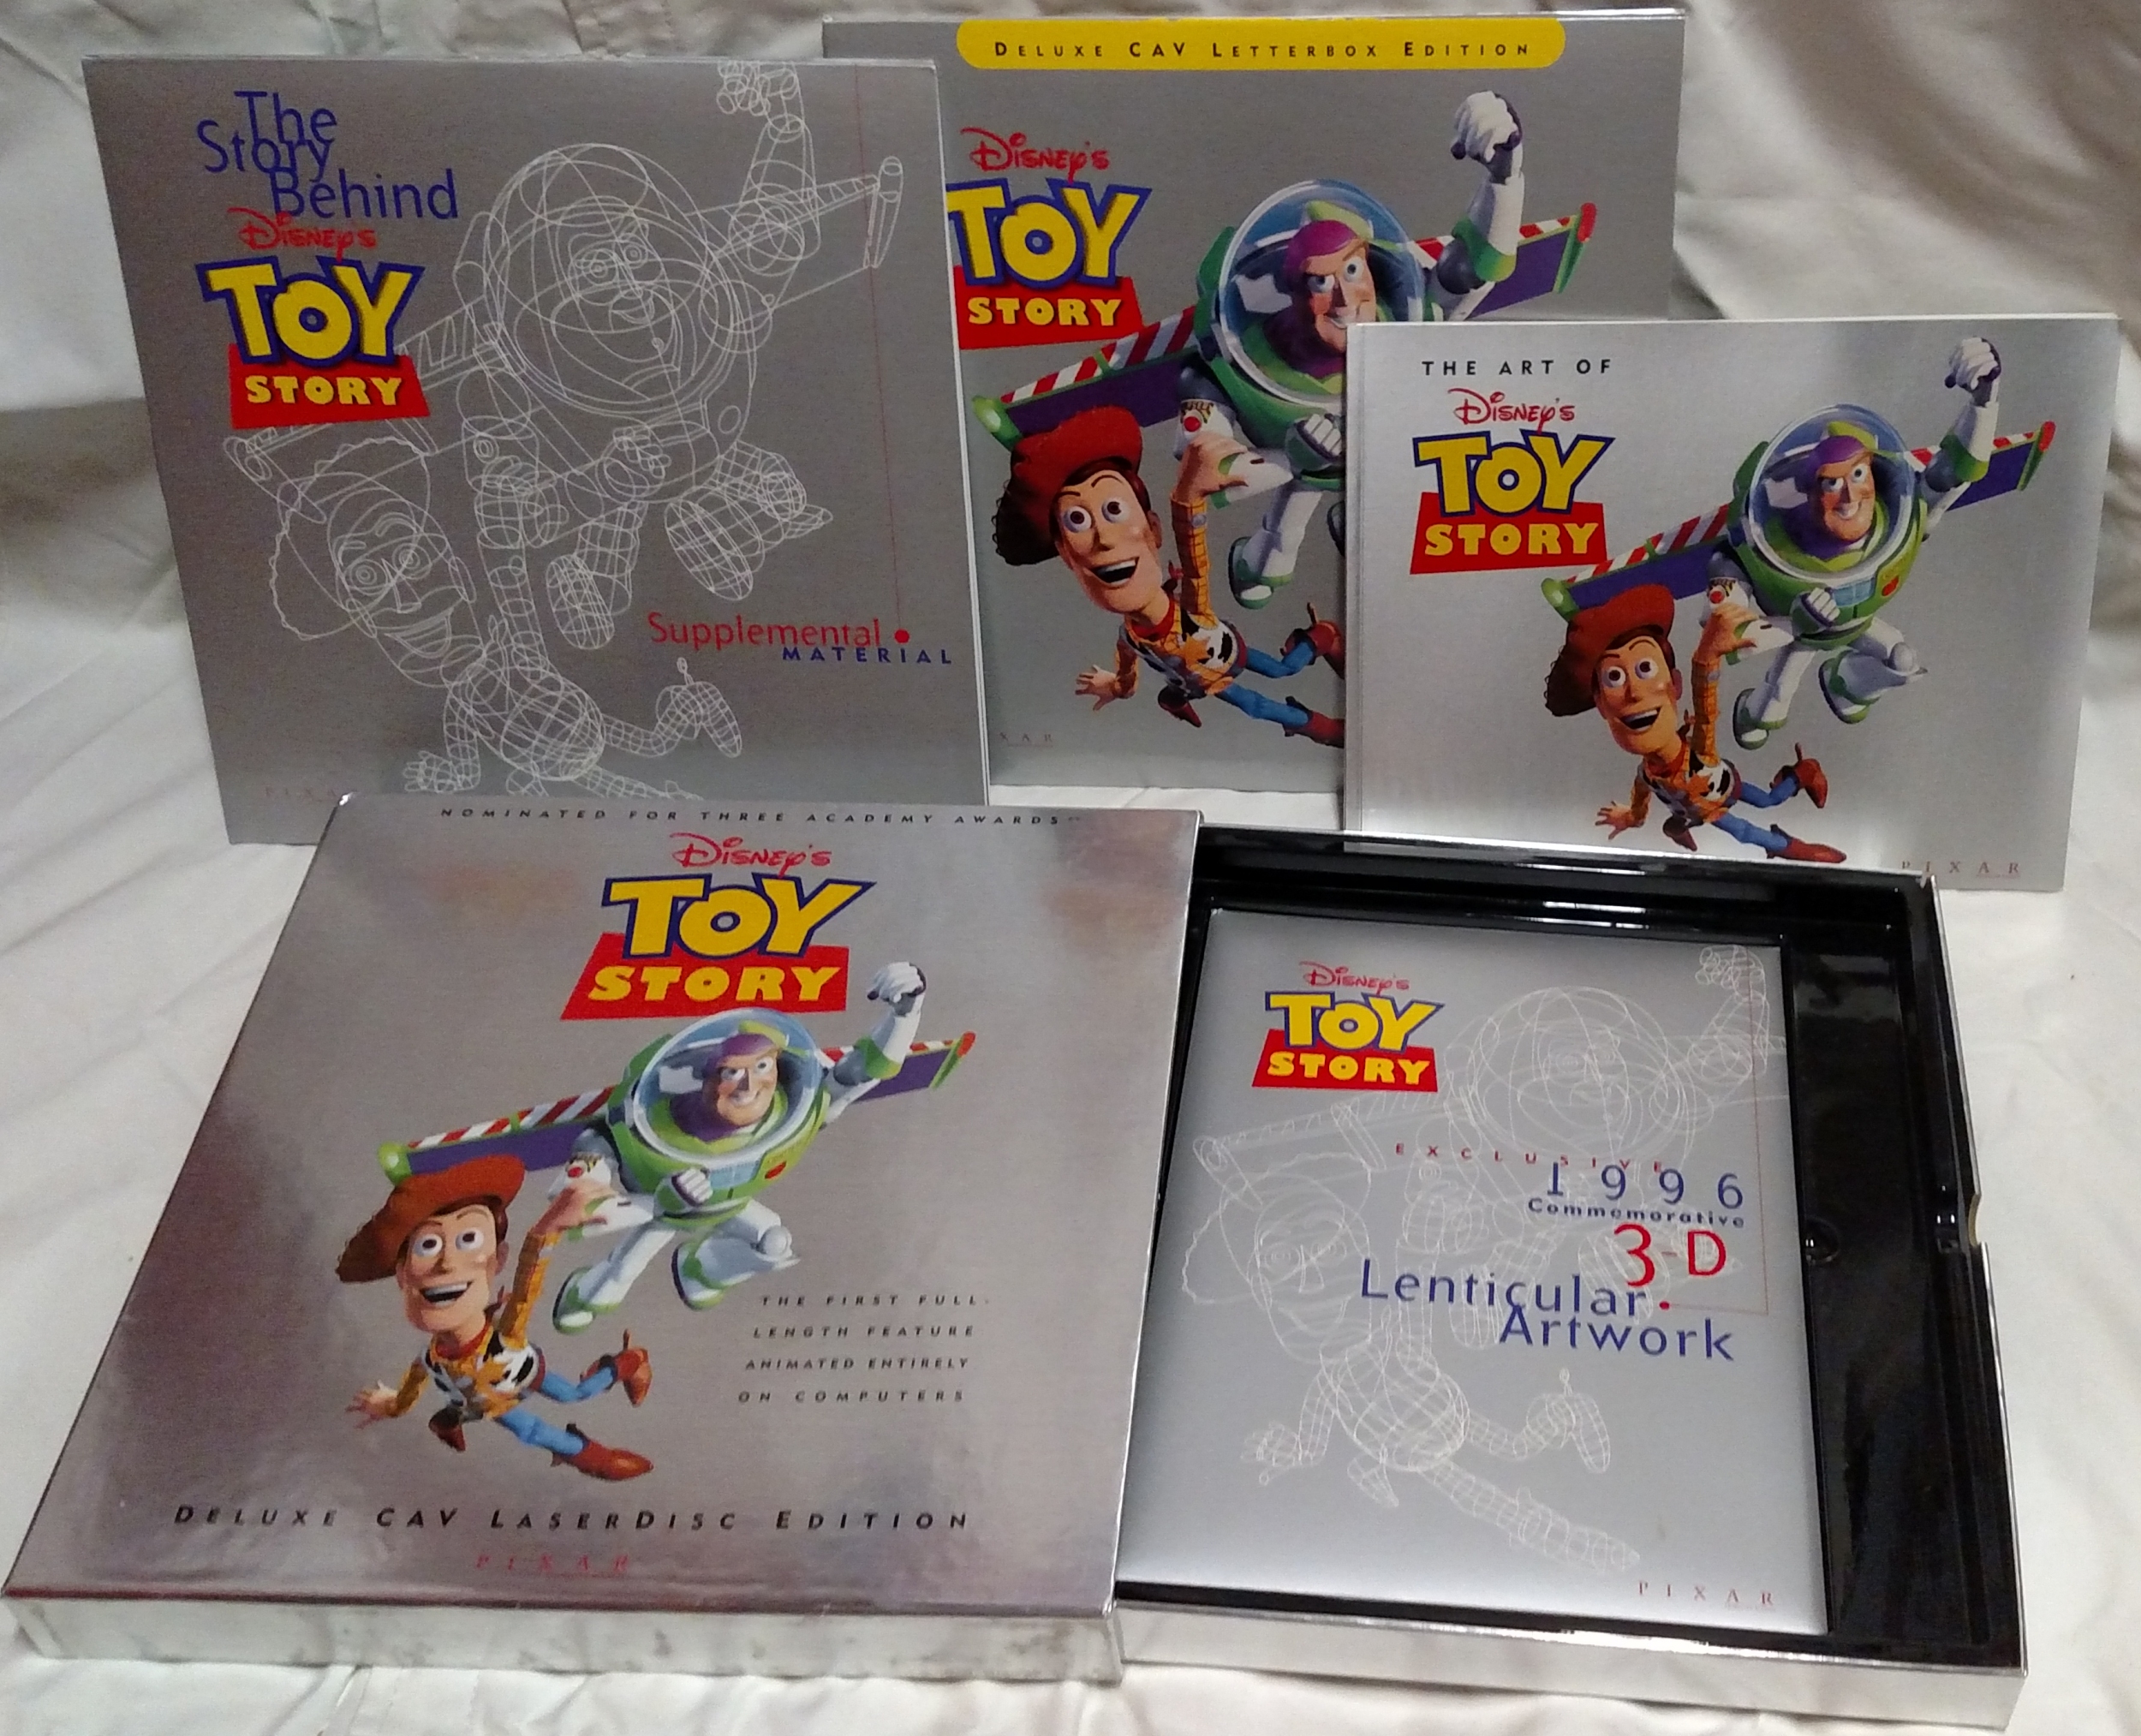 Toy Story Laserdisc - Box Contents